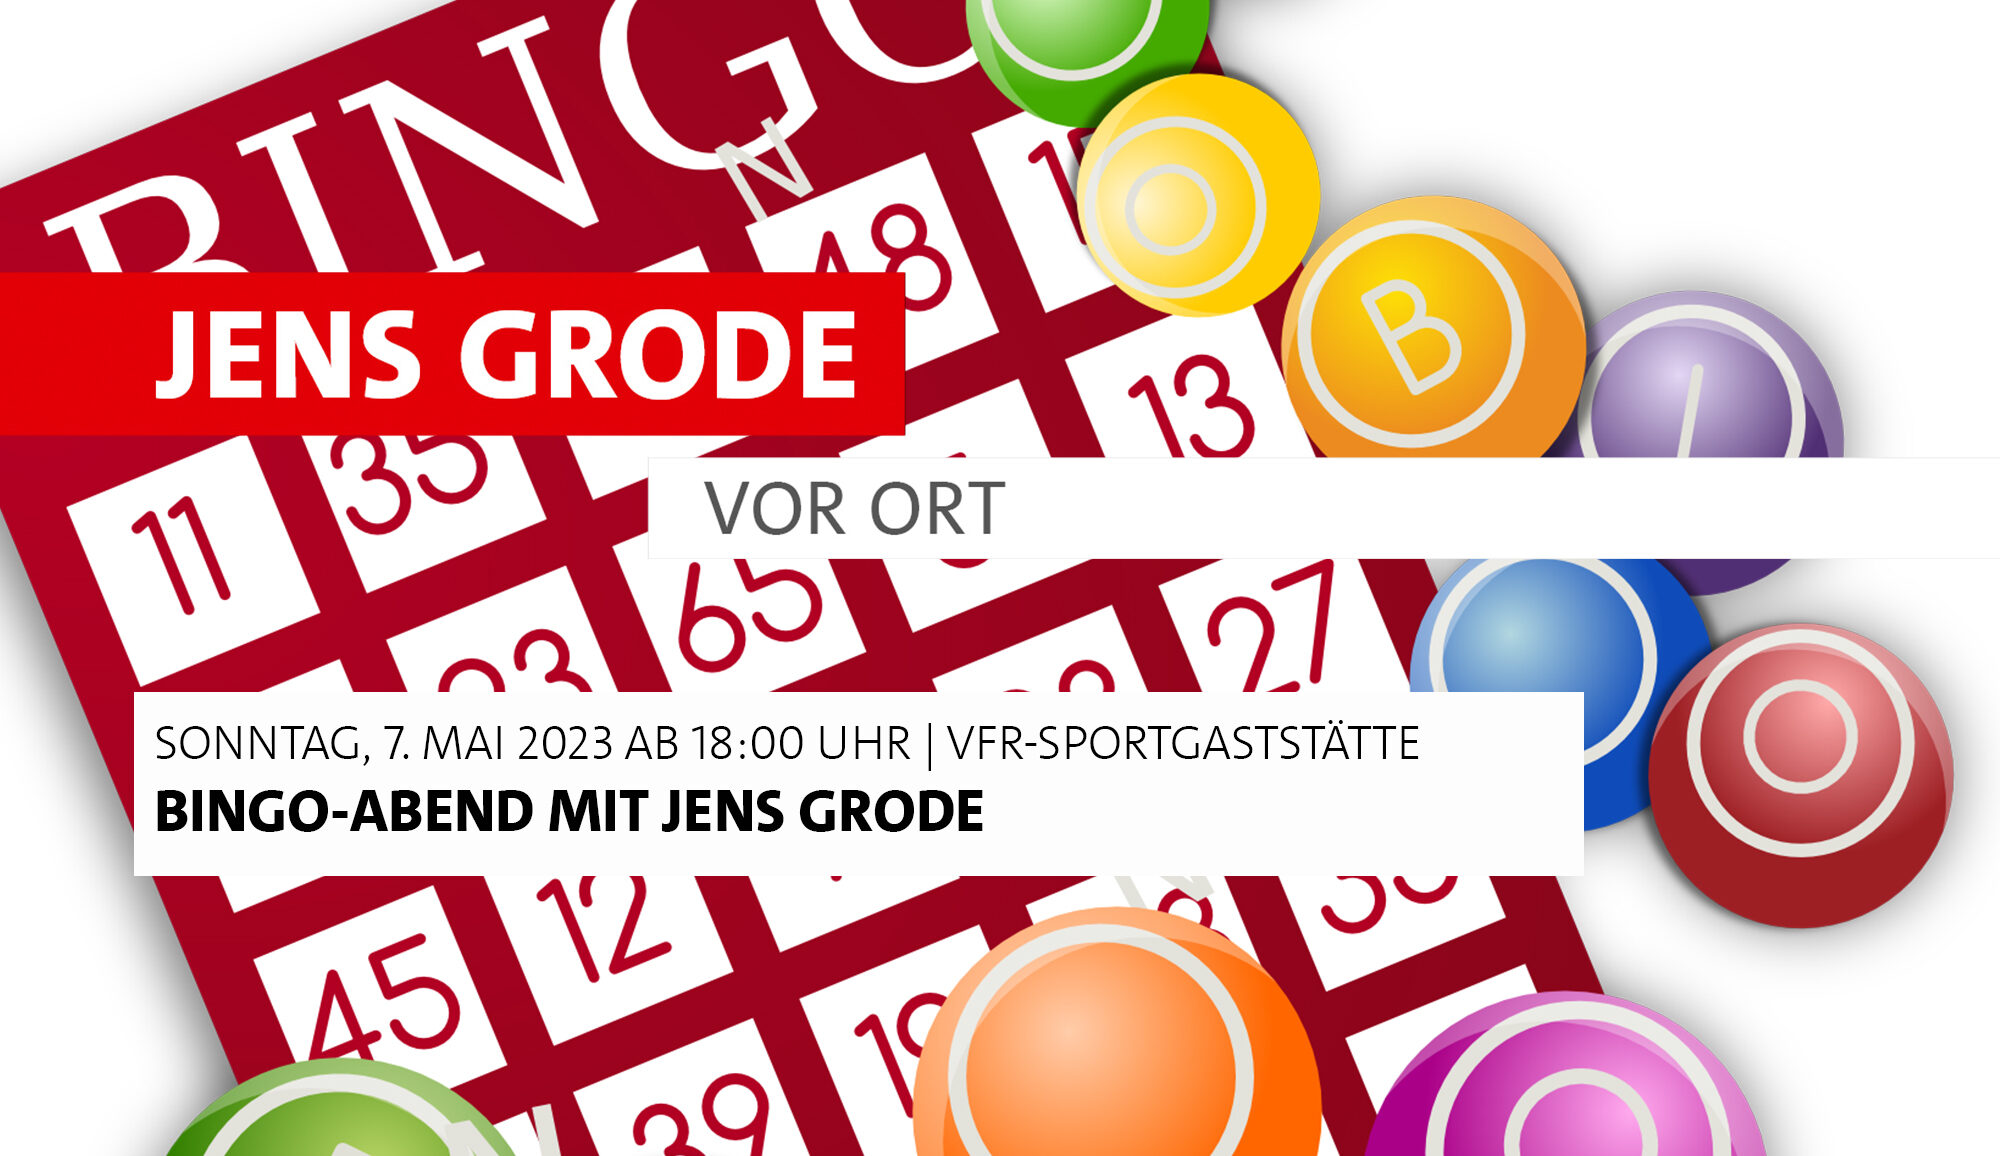 Bingo-Abend mit Jens Grode